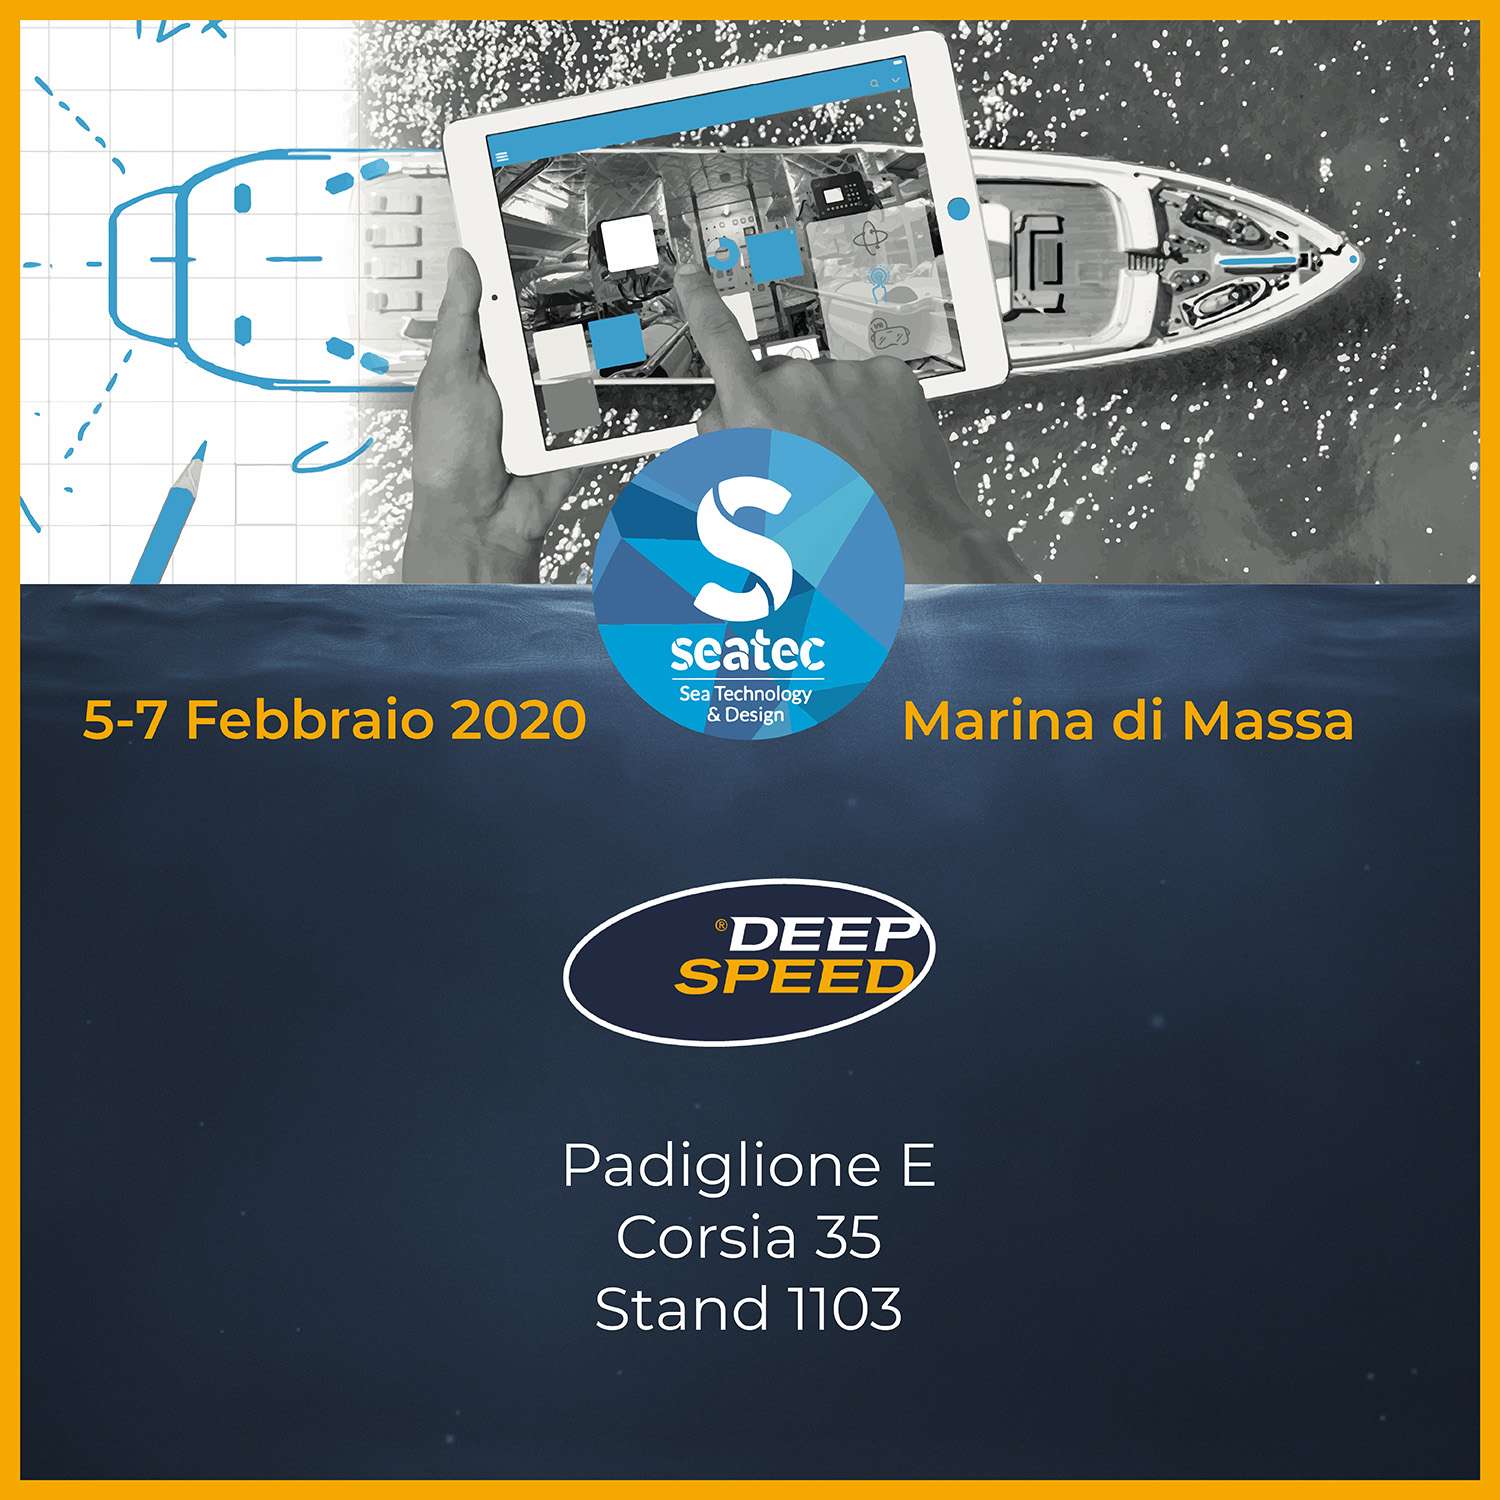 DeepSpeed sarà presente al Seatec di Carrara 2020